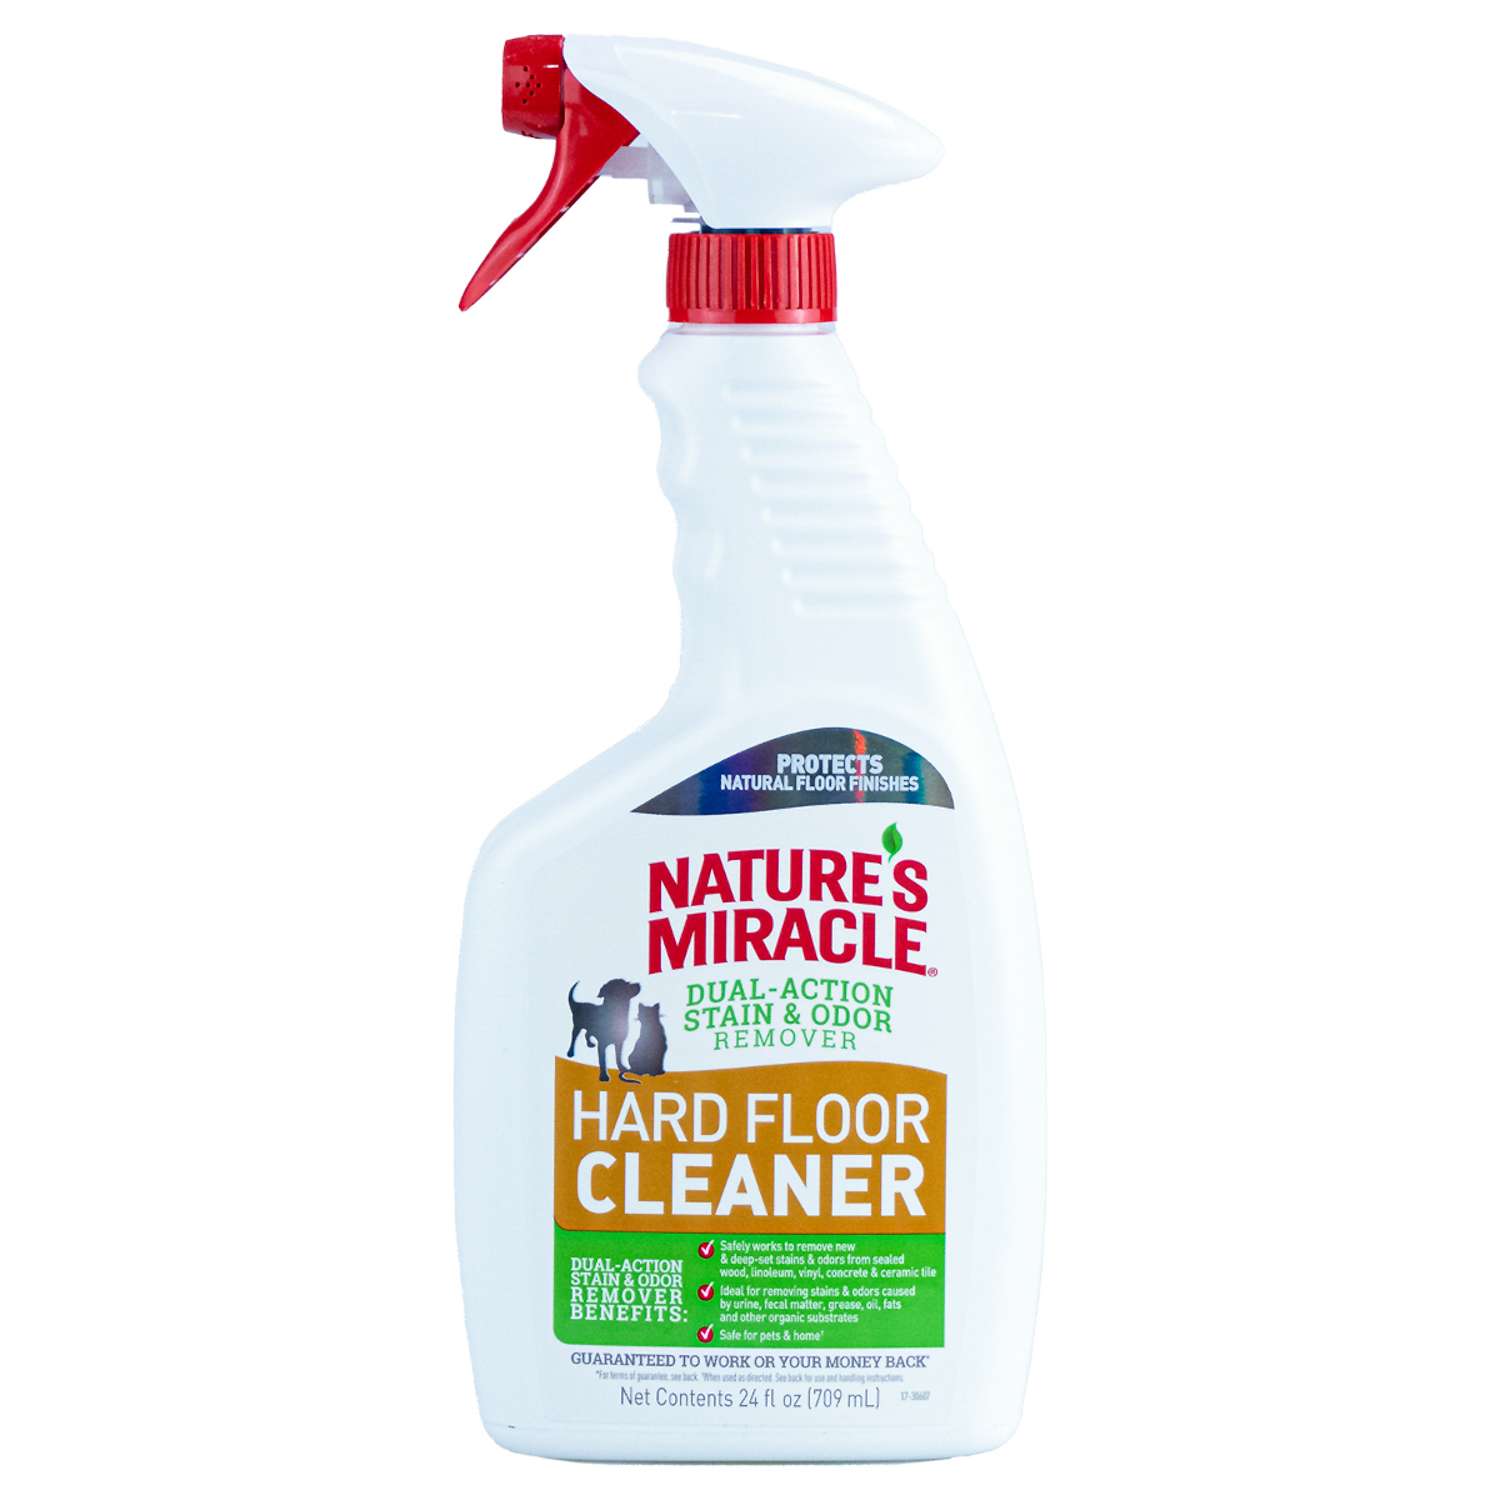 Средство Natures Miracle Hard Floor Cleaner от пятен и запахов для твердых покрытий полов спрей 709мл - фото 1